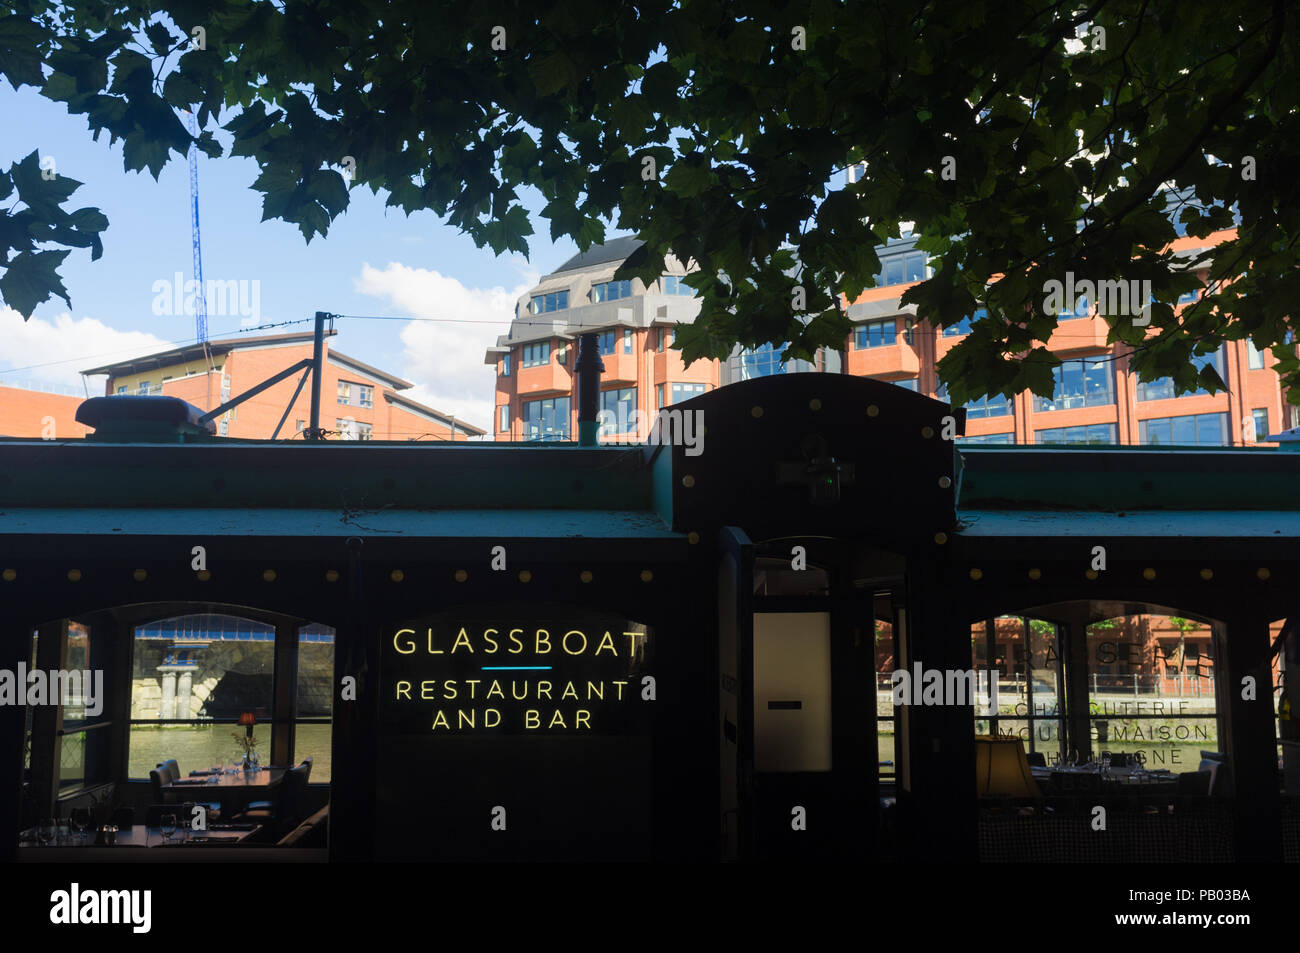 Glassboat restaurant and bar on the river side, Bristol, UK Stock Photo